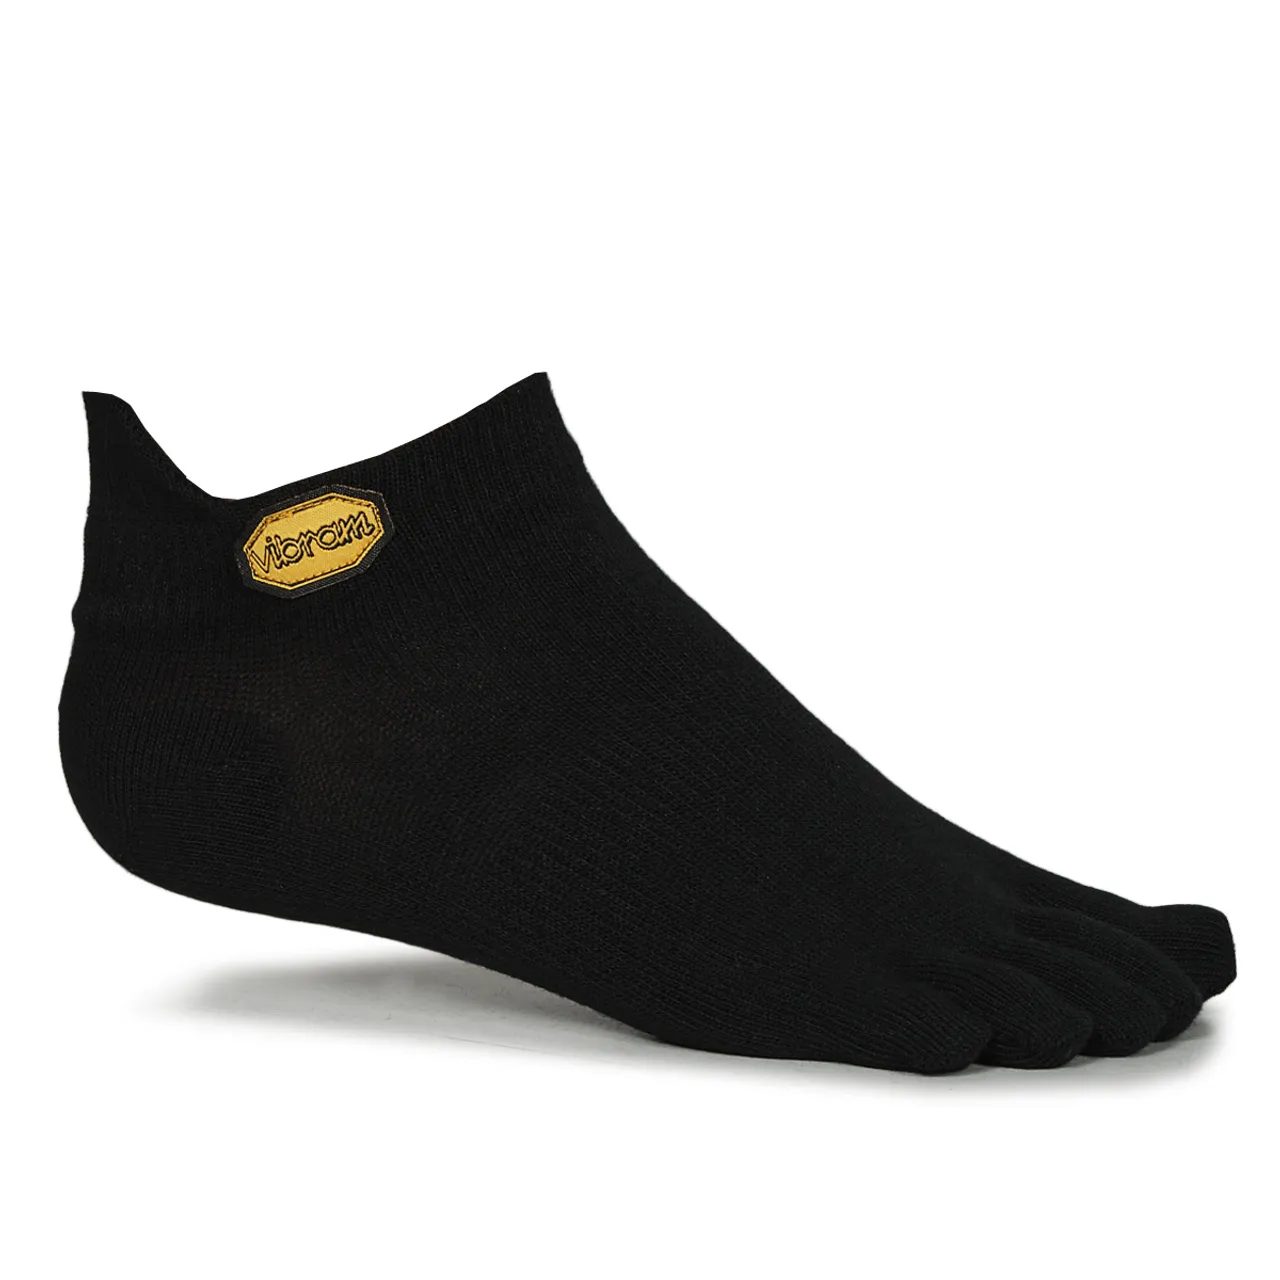 Vibram Fivefingers  ATHLETIC NO SHOW  women's Sports socks in Black